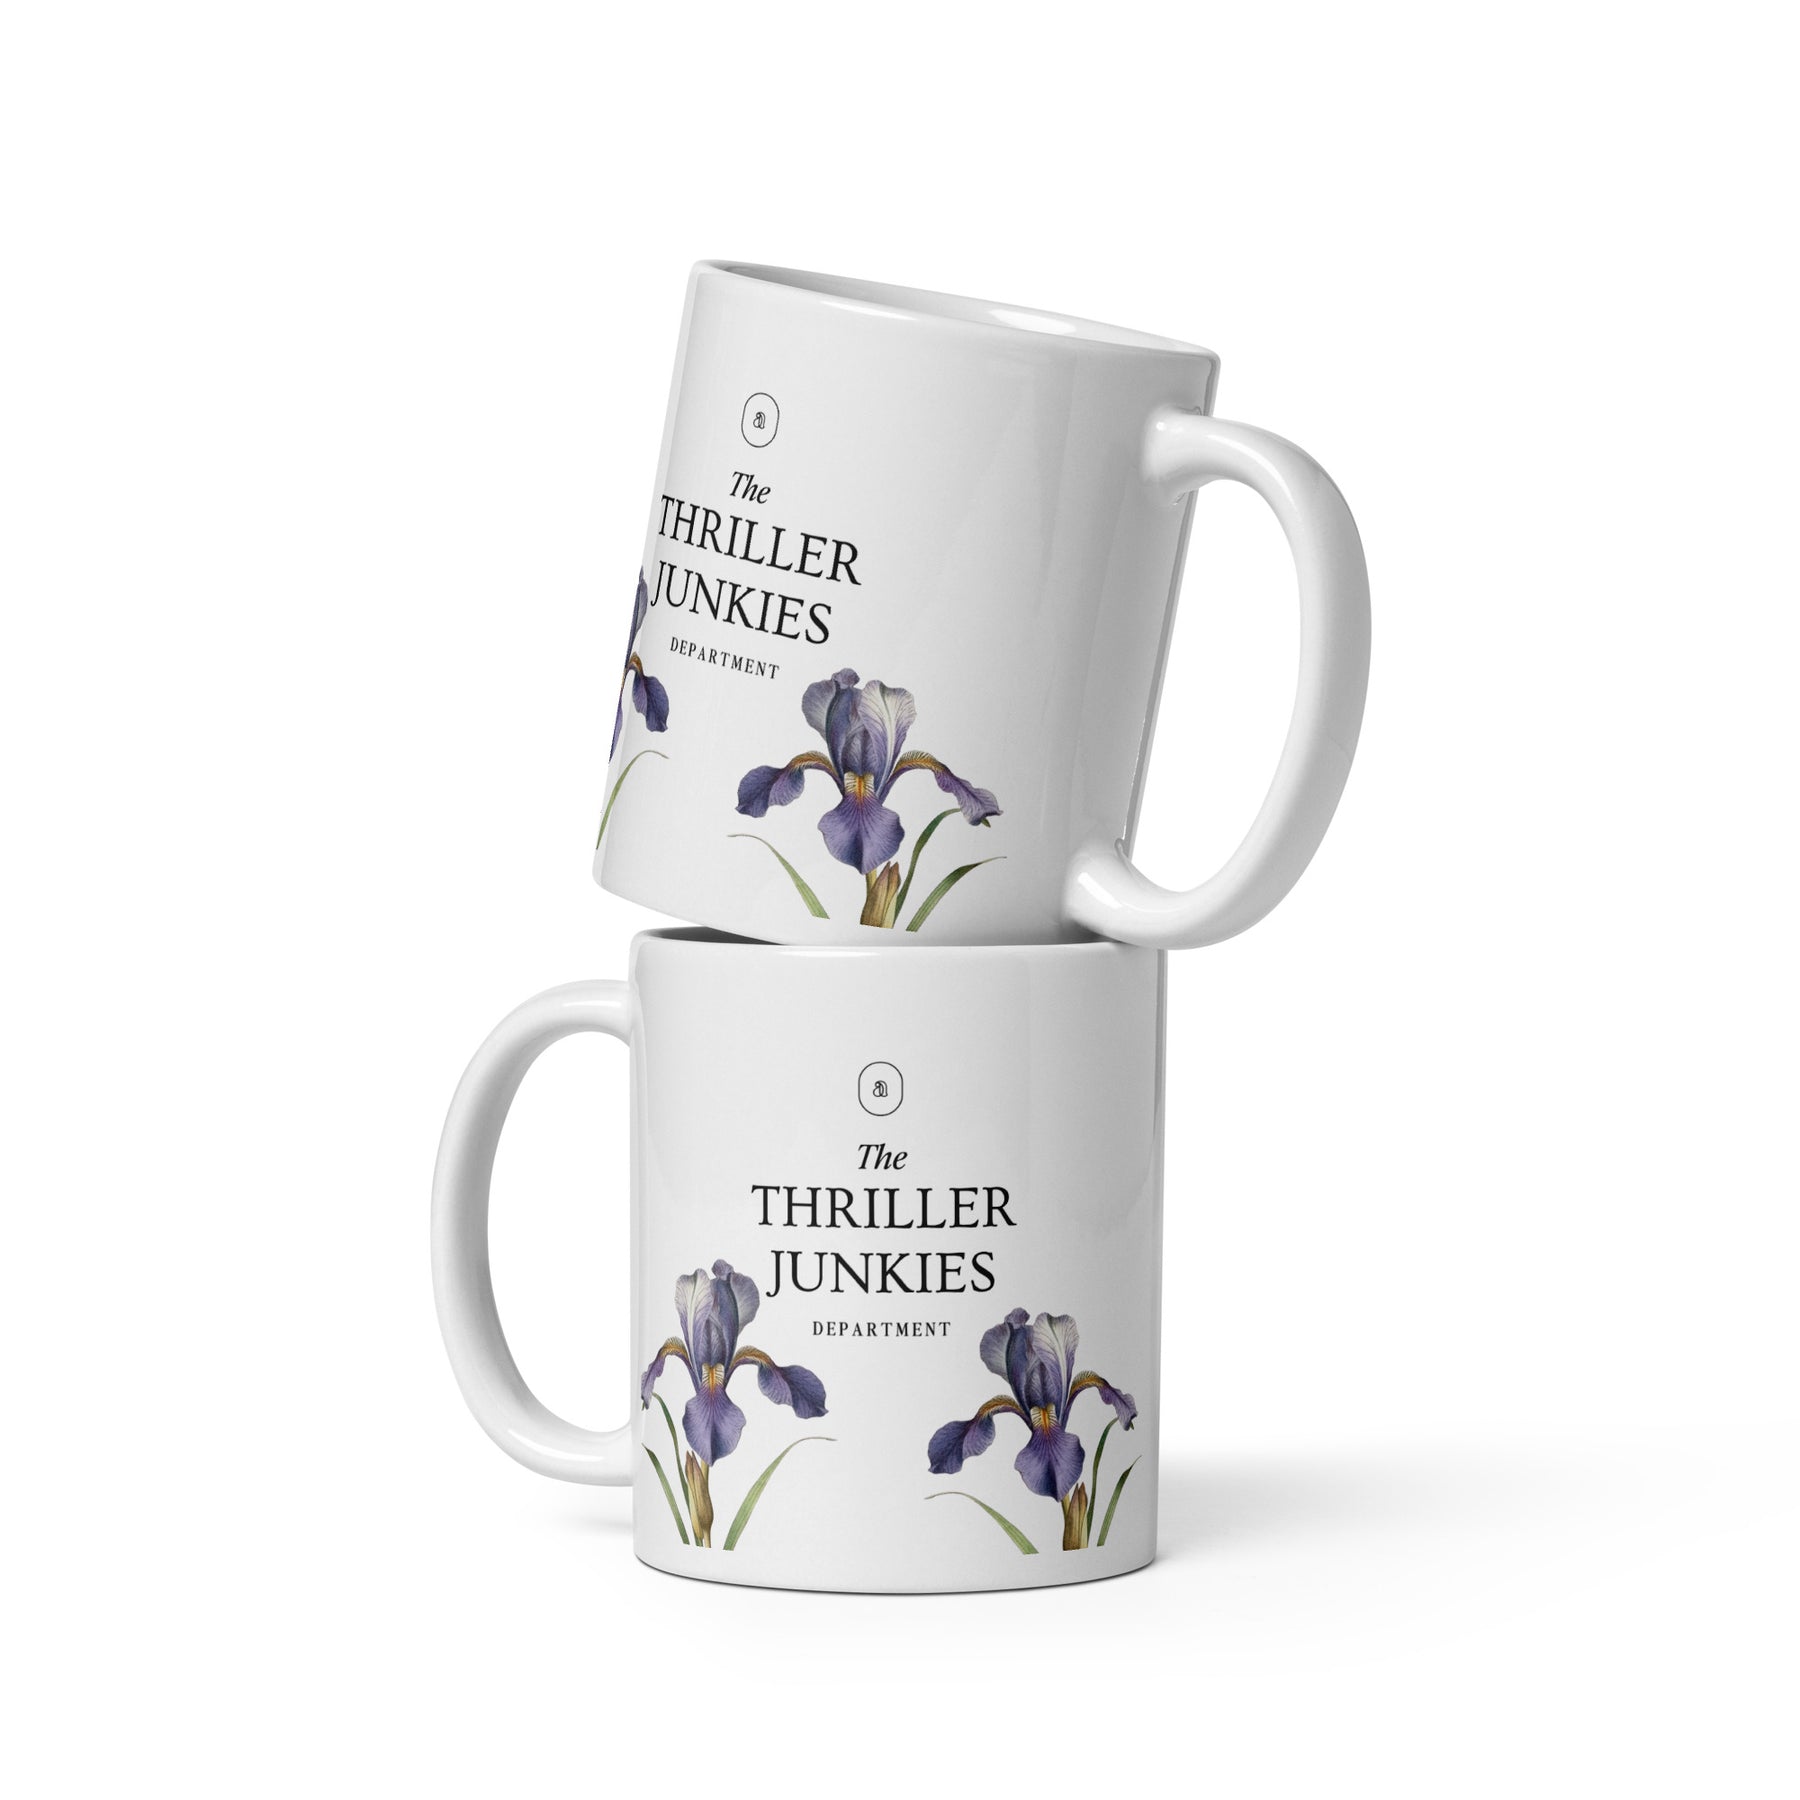 The Thriller Junkies Department - White glossy mug